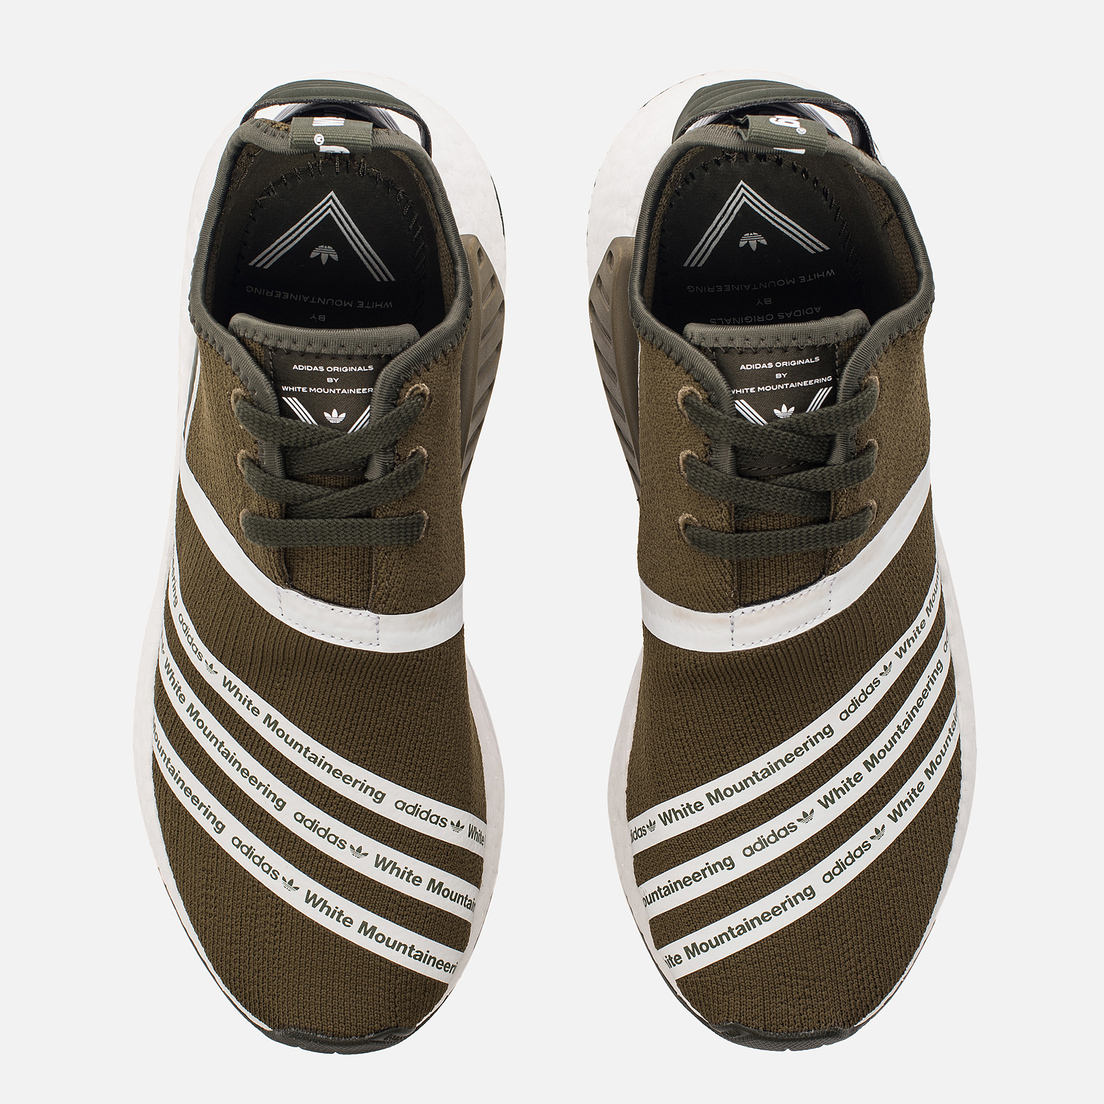 adidas Originals Мужские кроссовки x White Mountaineering NMD R2 Primeknit